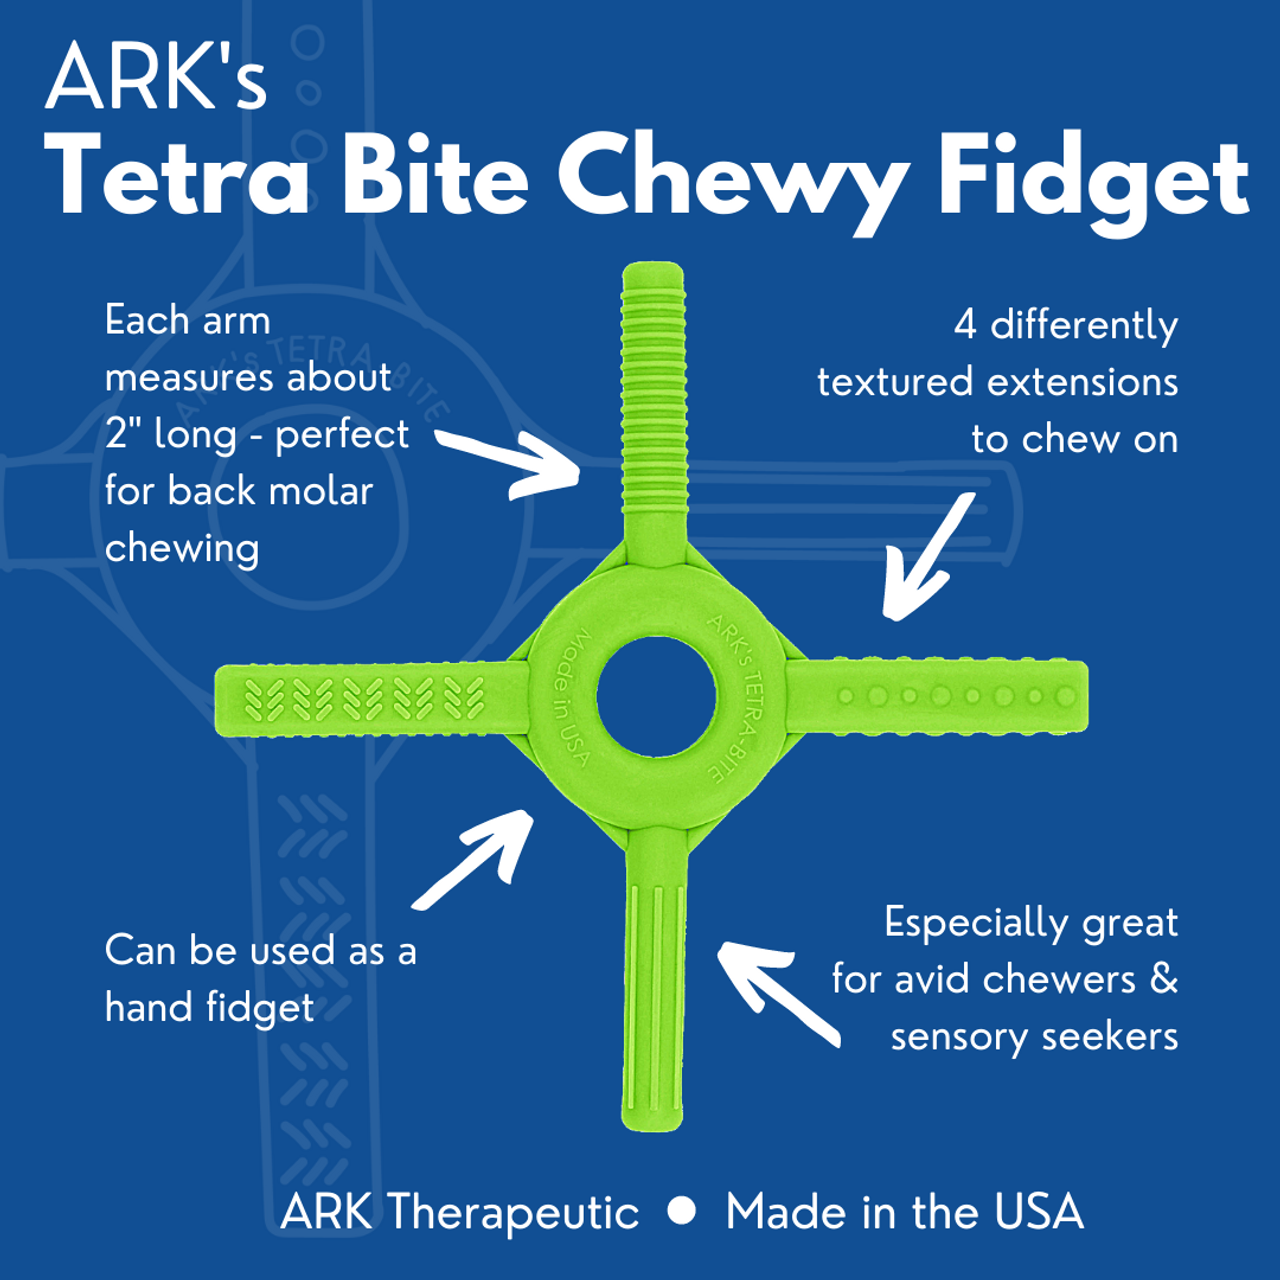 Ark_tetra_bite_chewy_fidget_information_guide